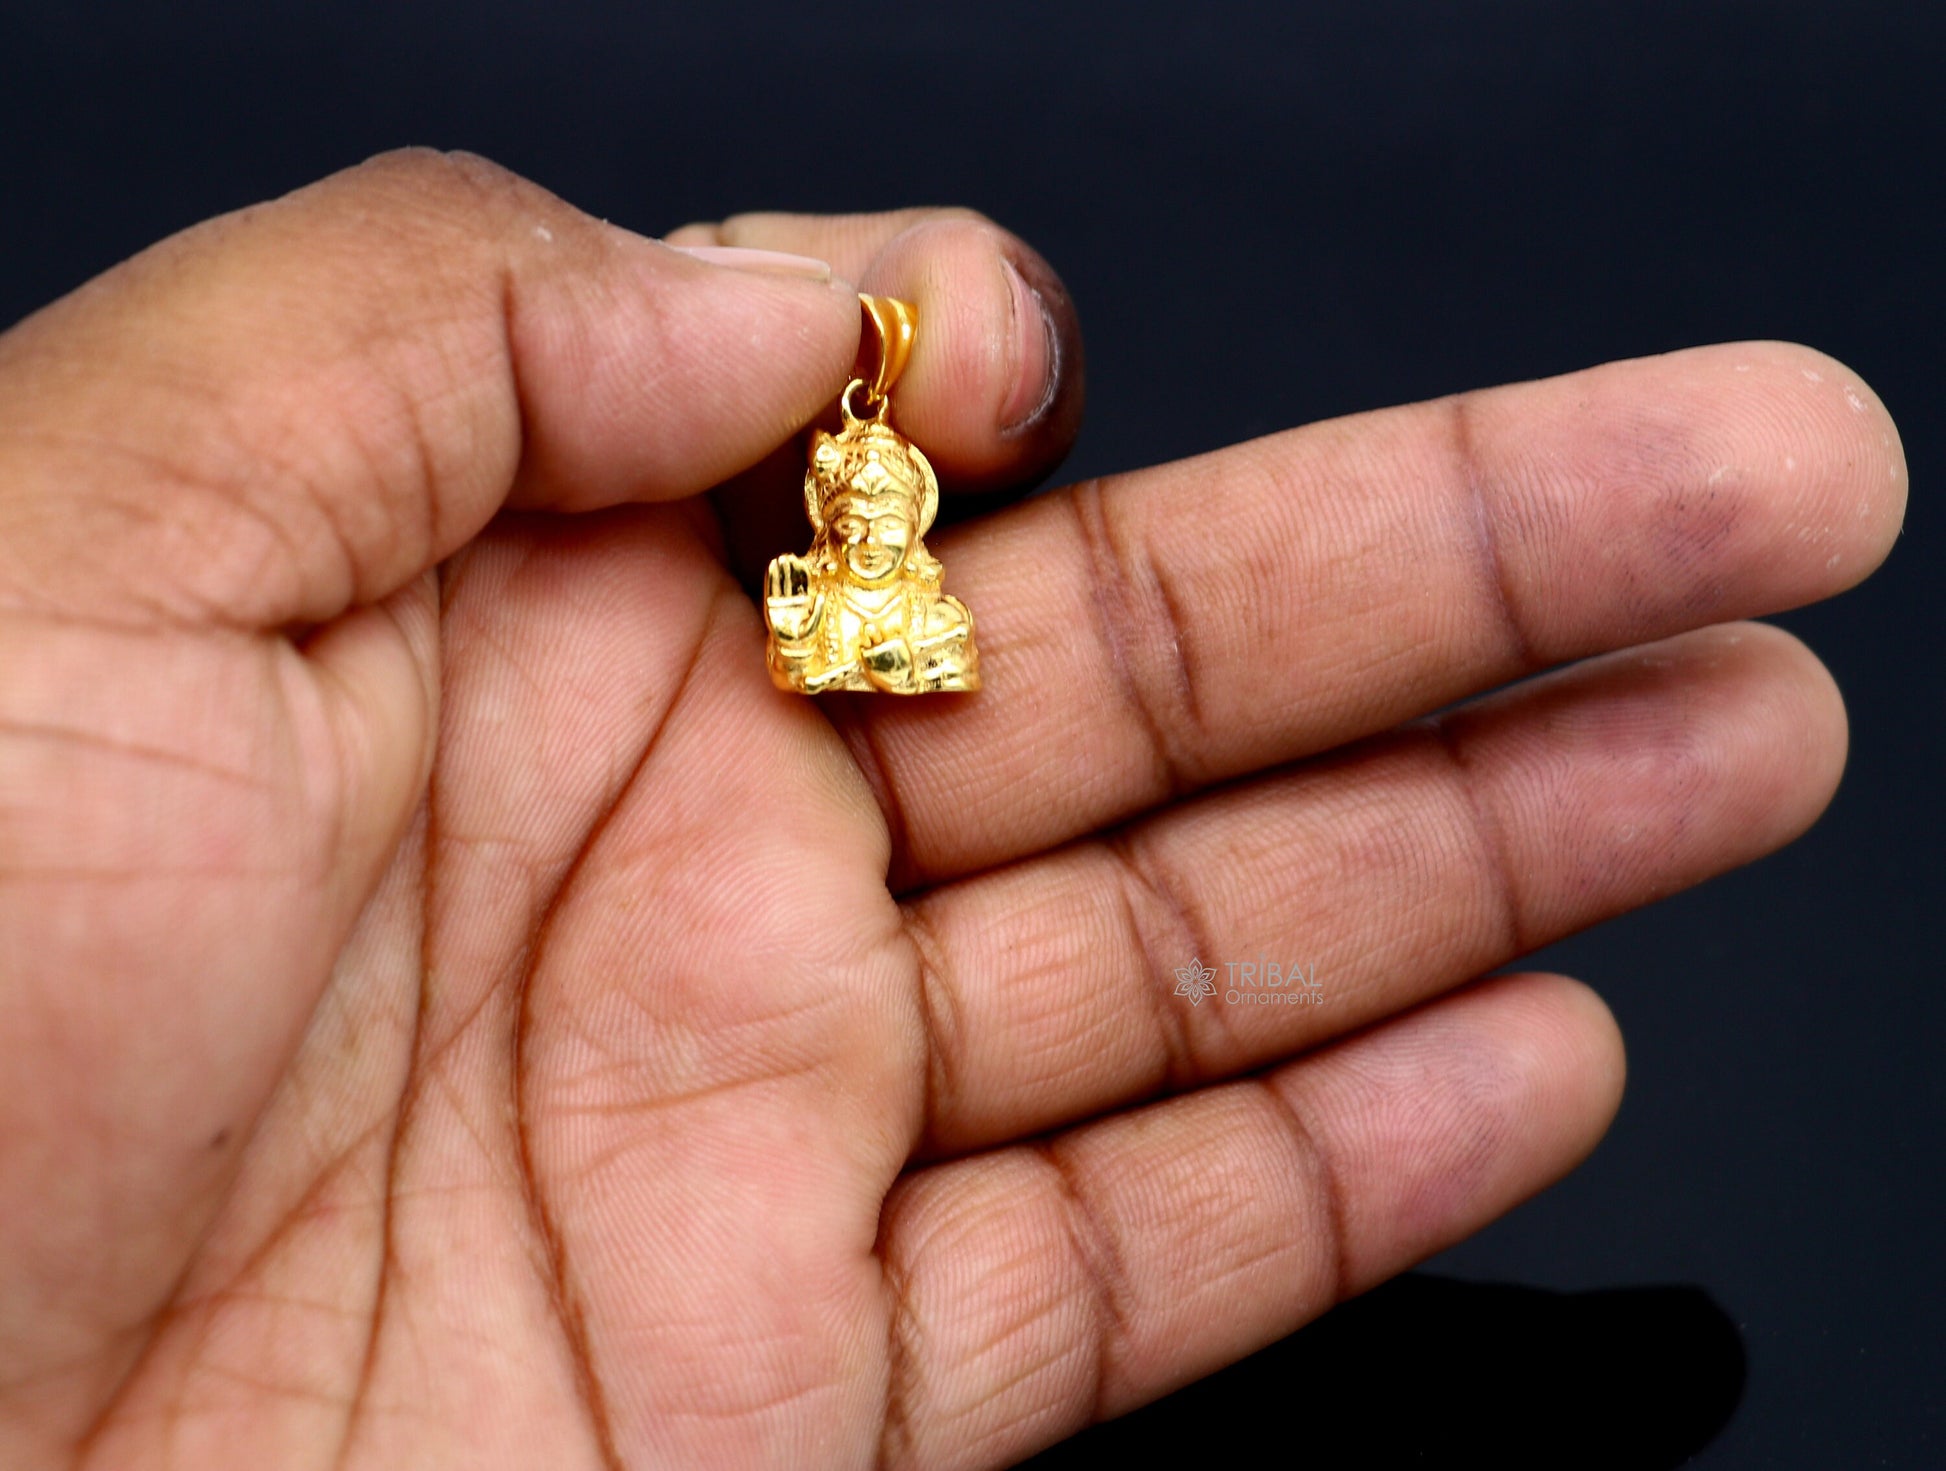 925 sterling silver vintage stylish Hindu idol Divine Krishna Pendant, amazing gold polished design stunning pendant gifting jewelry nsp608 - TRIBAL ORNAMENTS